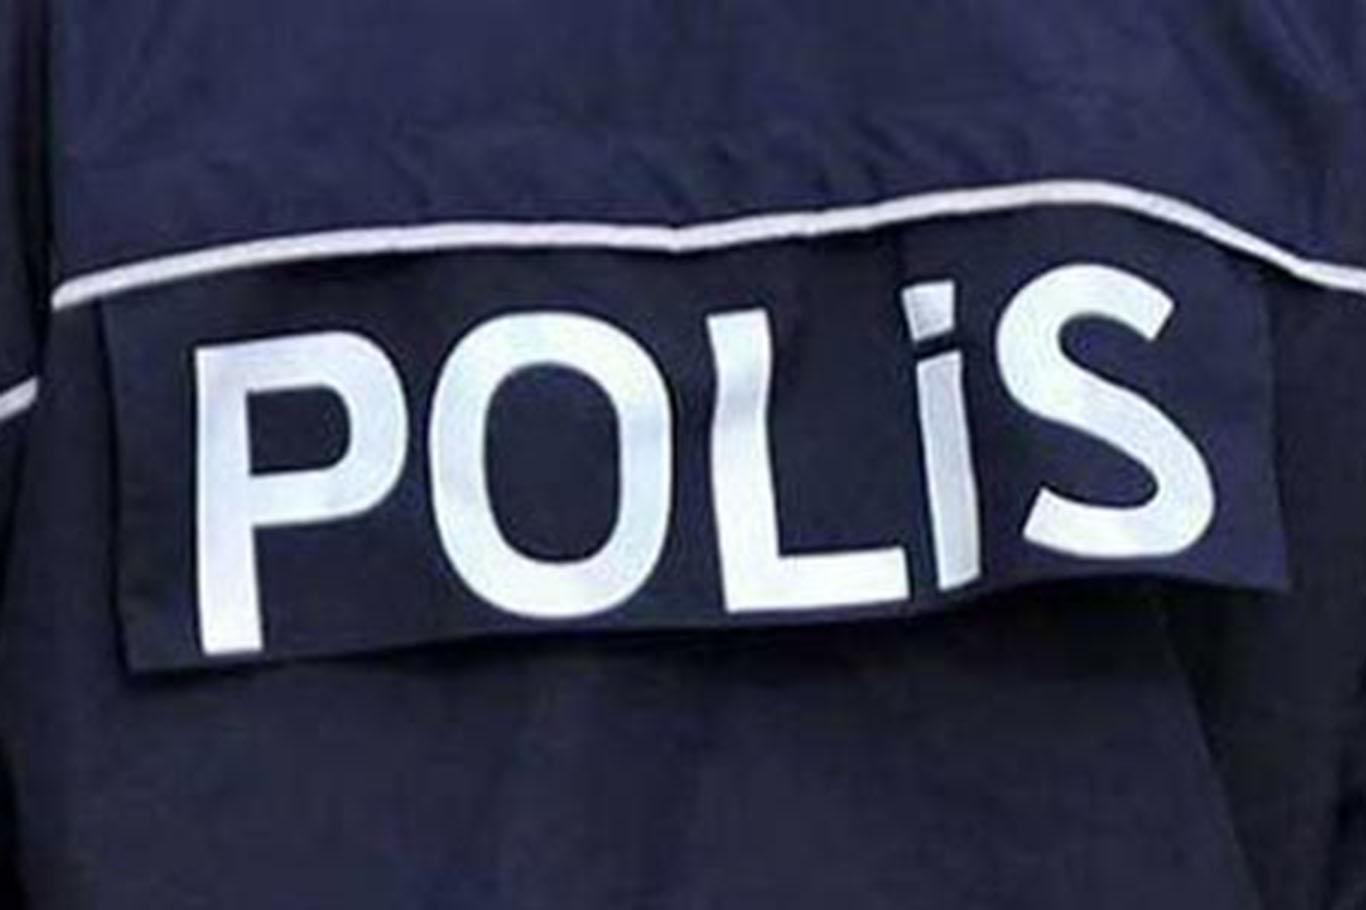 Malatya’da 21 polis tutuklandı